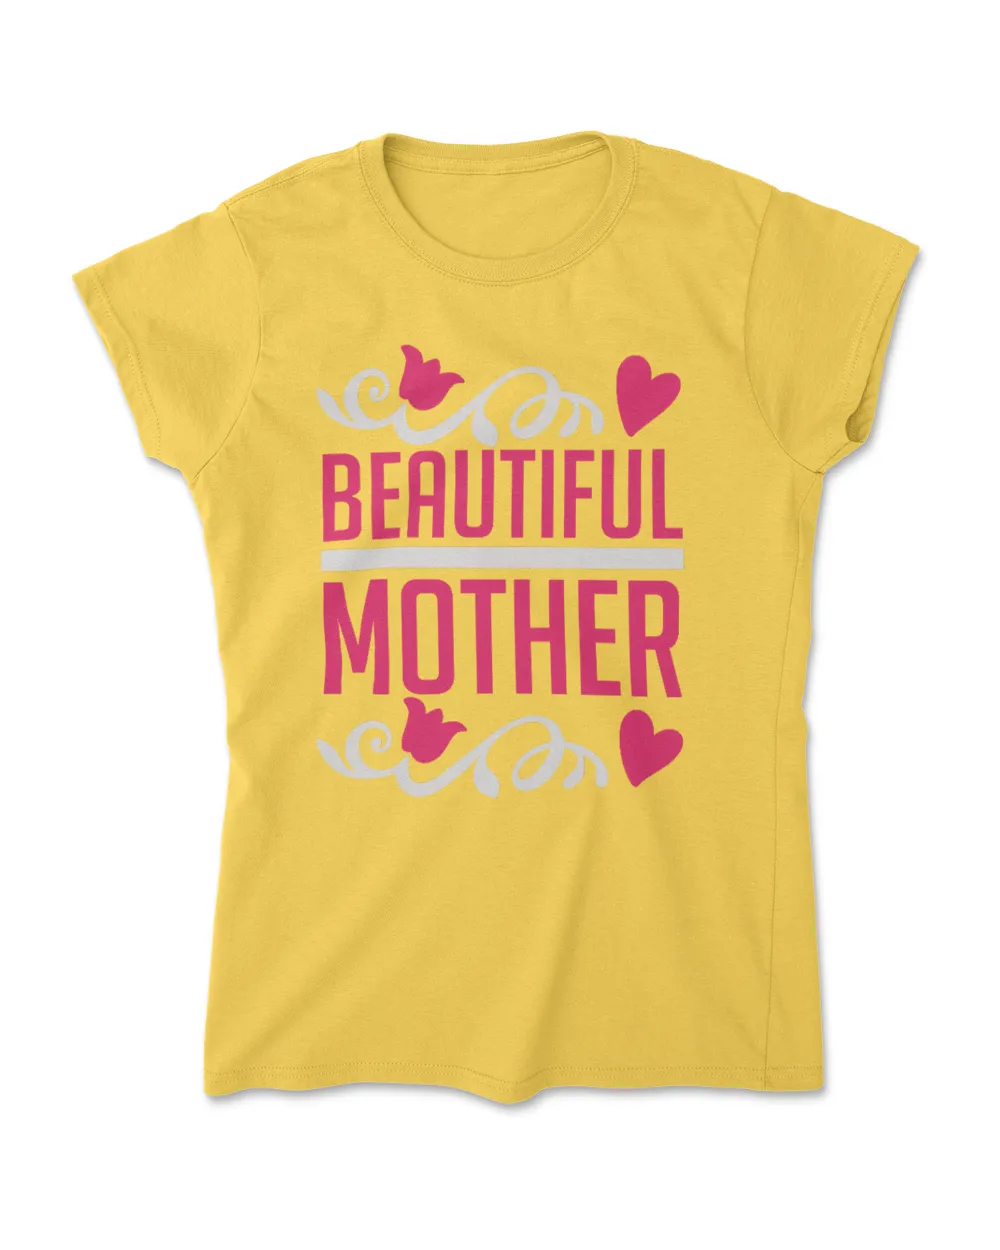 Beautiful mother t shirt